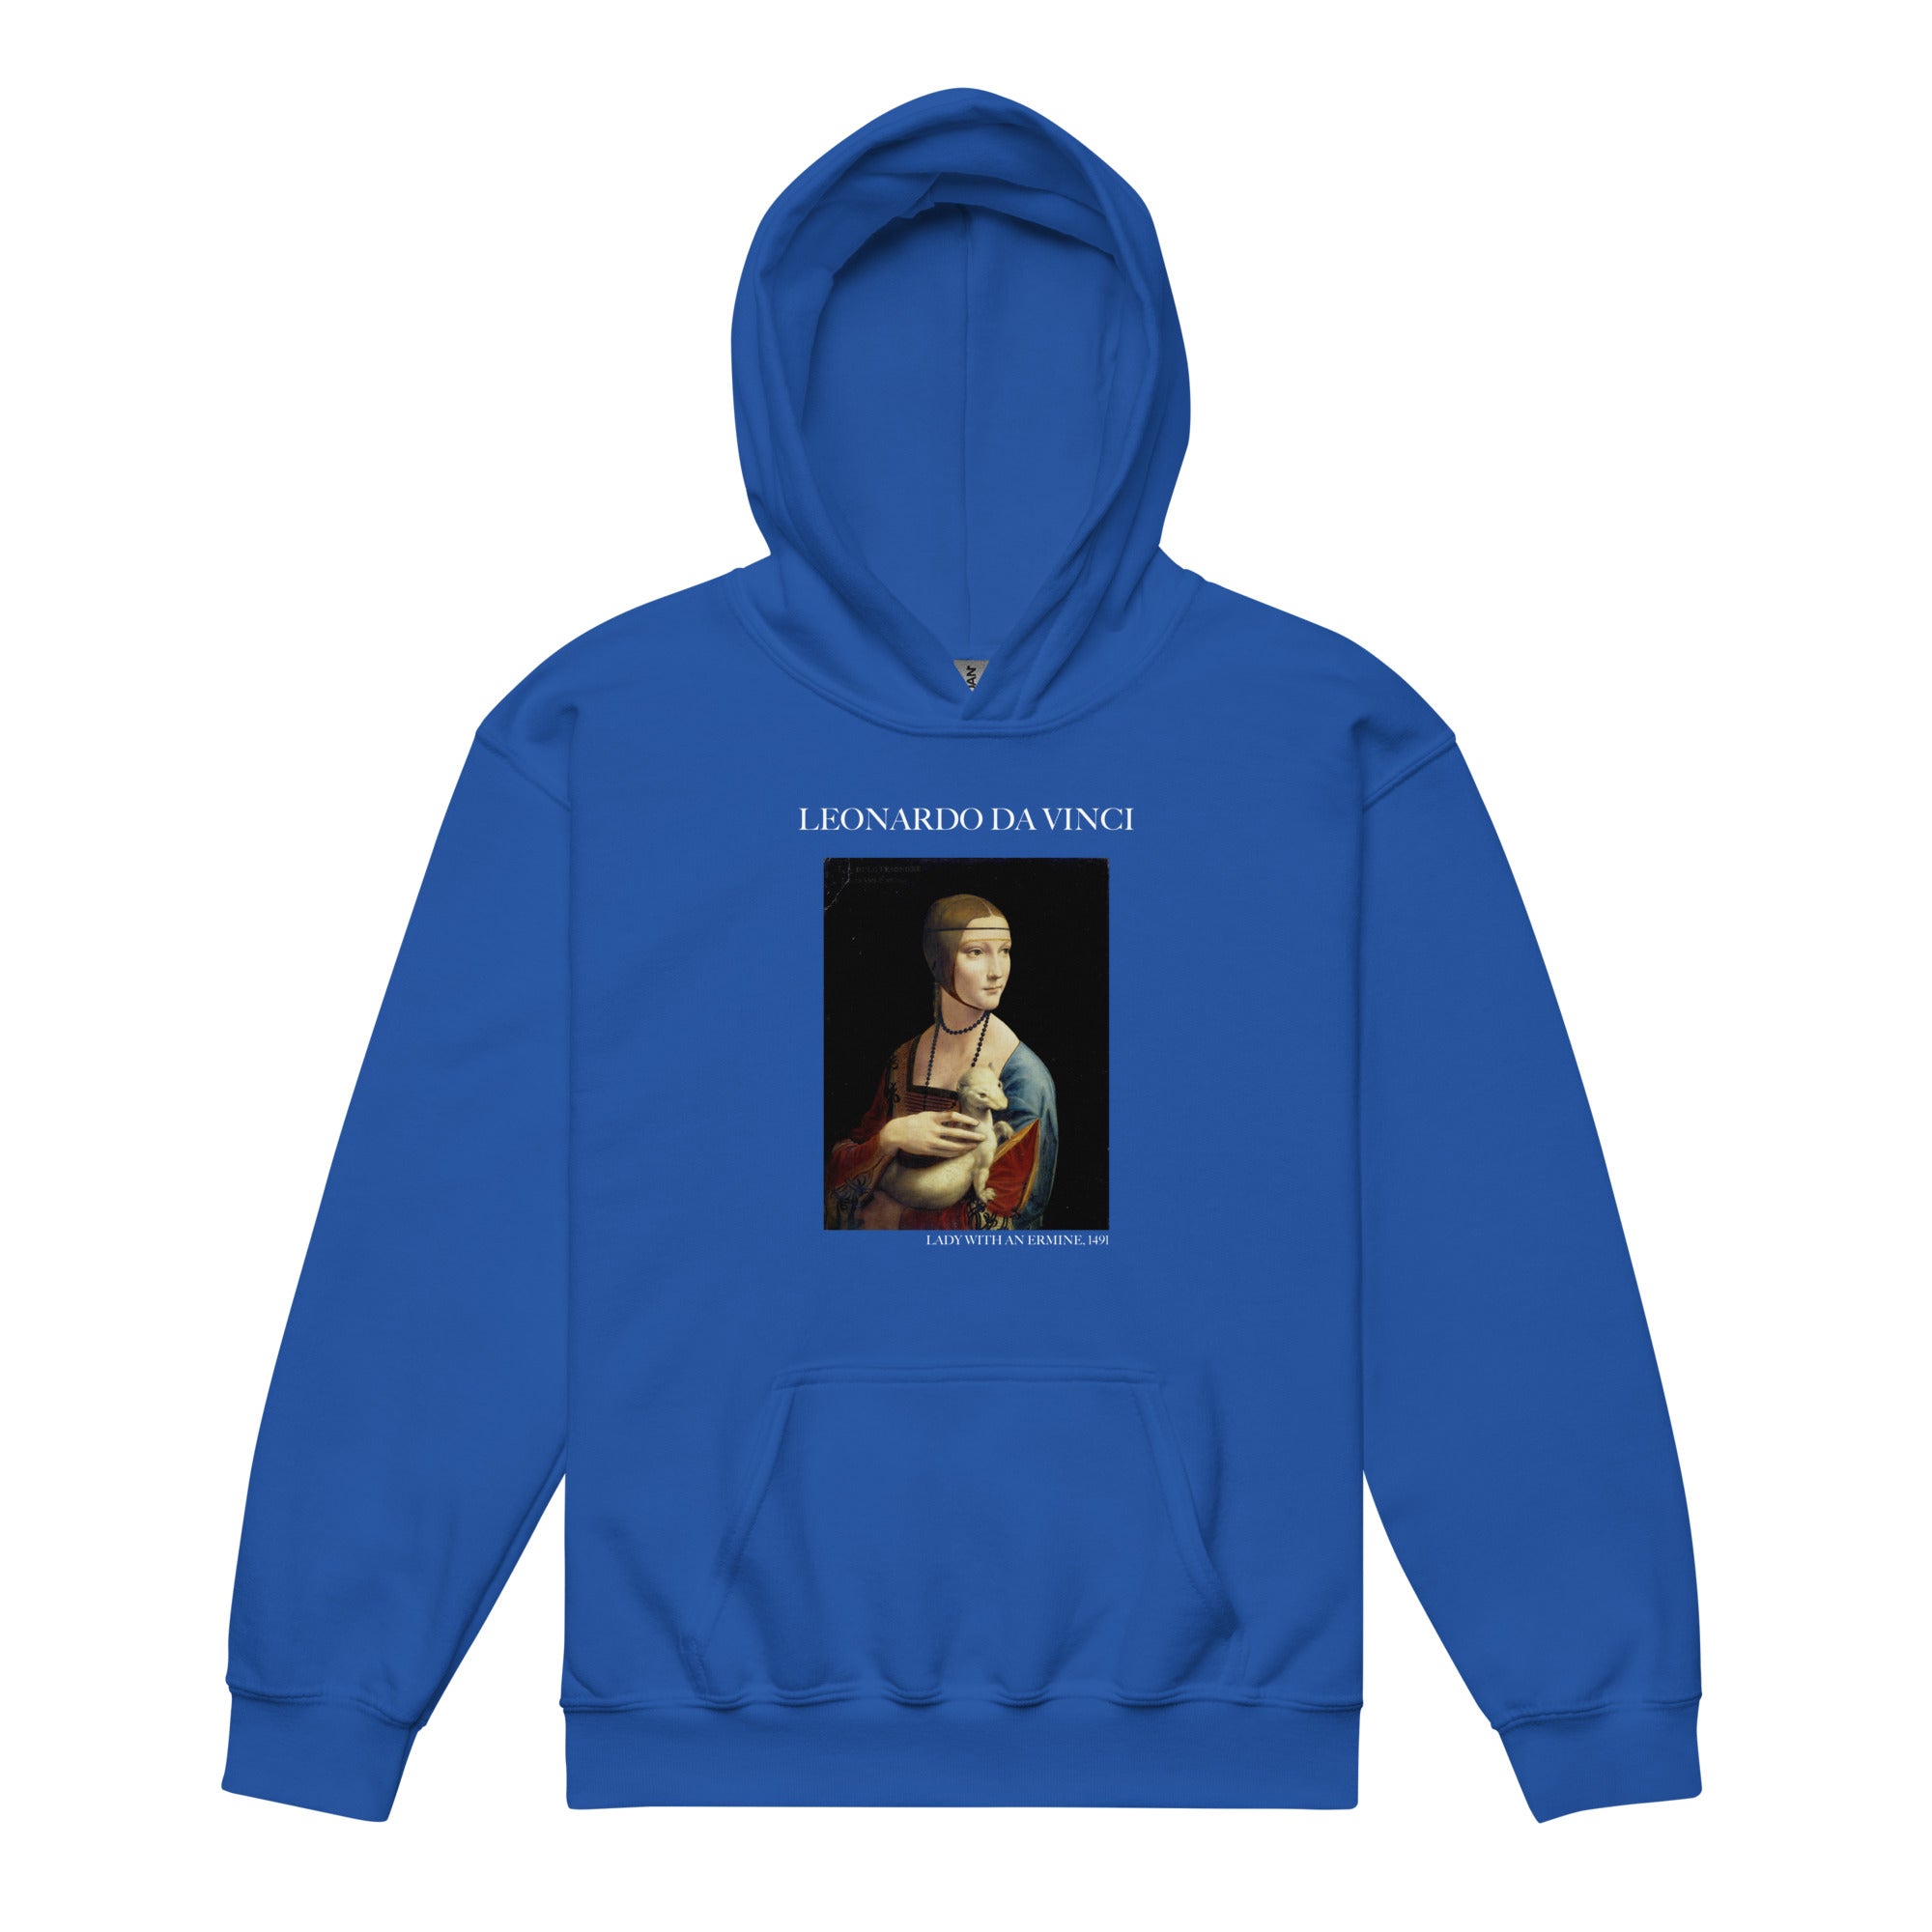 Leonardo da Vinci 'Lady with an Ermine' Famous Painting Hoodie | Premium Youth Art Hoodie